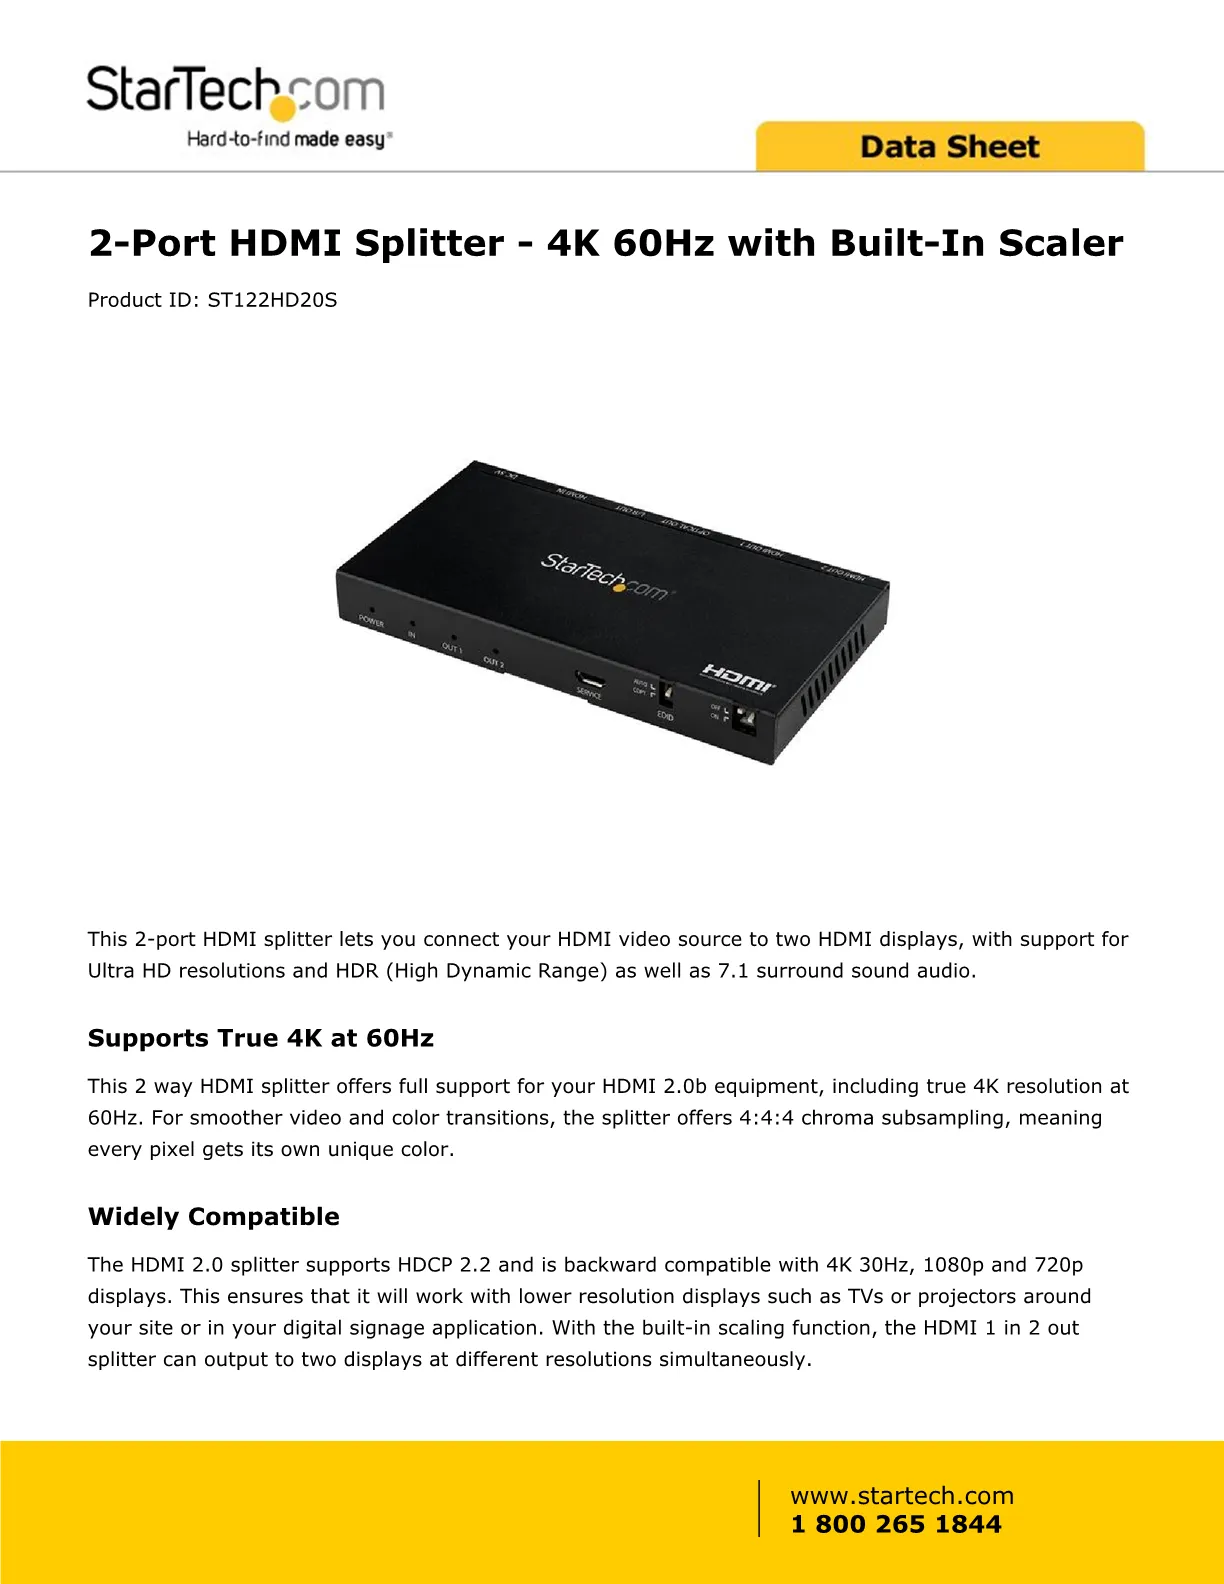 StarTech.com HDMI Splitter - 2-Port - 4K 60Hz - HDMI Splitter 1 In